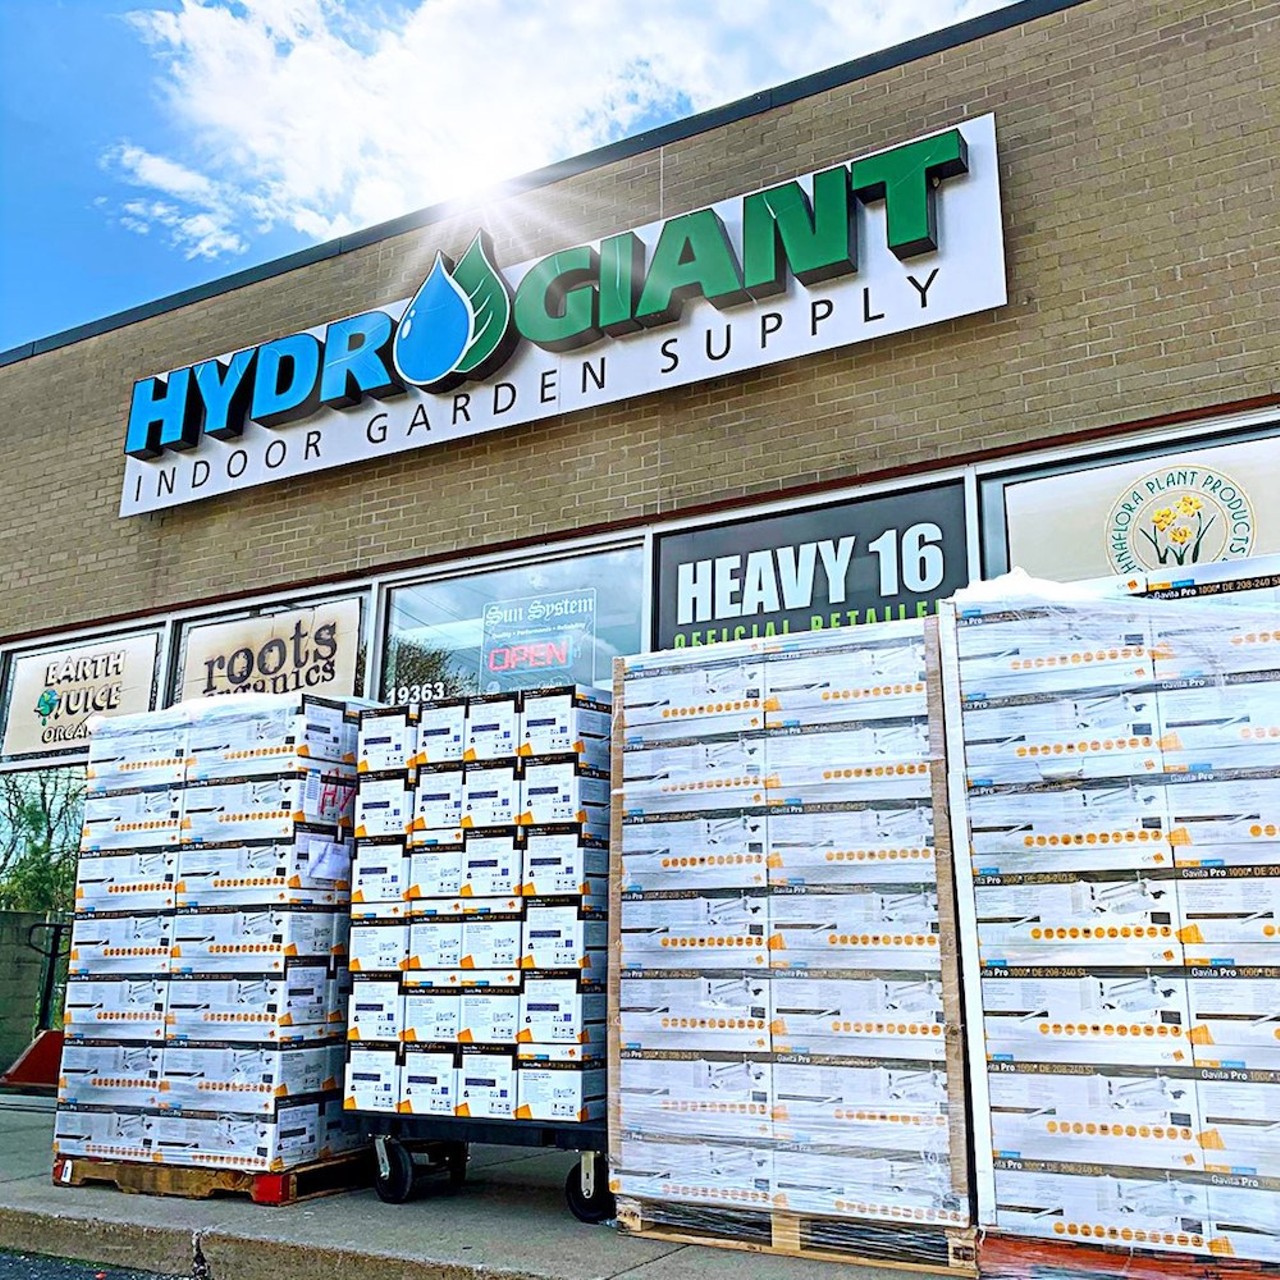 Best Grow Shop (Oakland)
HydroGiant
Multiple locations; hydrogiant.com
Photo via HydroGiant/Facebook